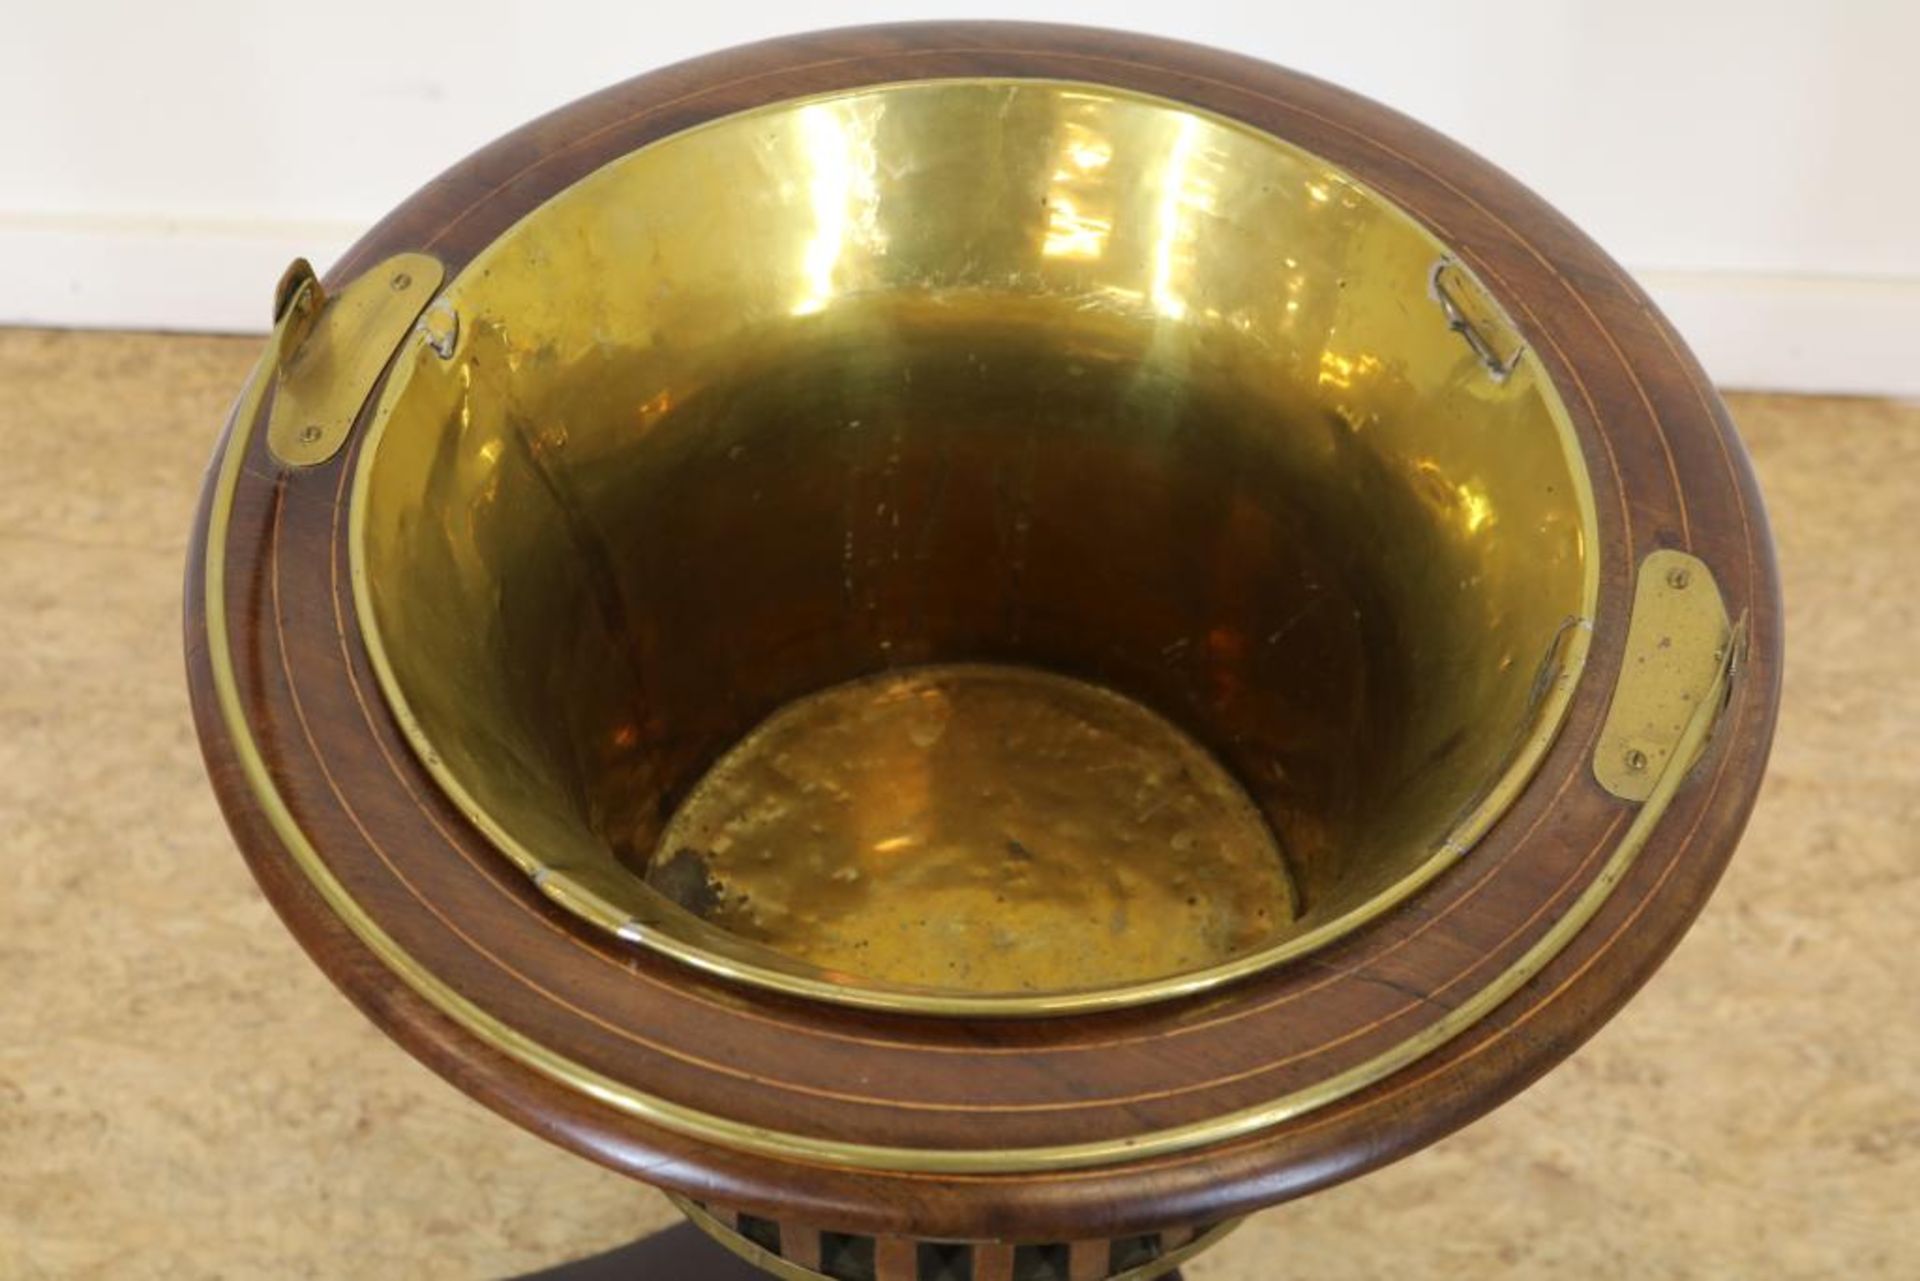 Mahogany "theestoof" with copper bowl, 19th century, h. 45 cm. - Bild 2 aus 2